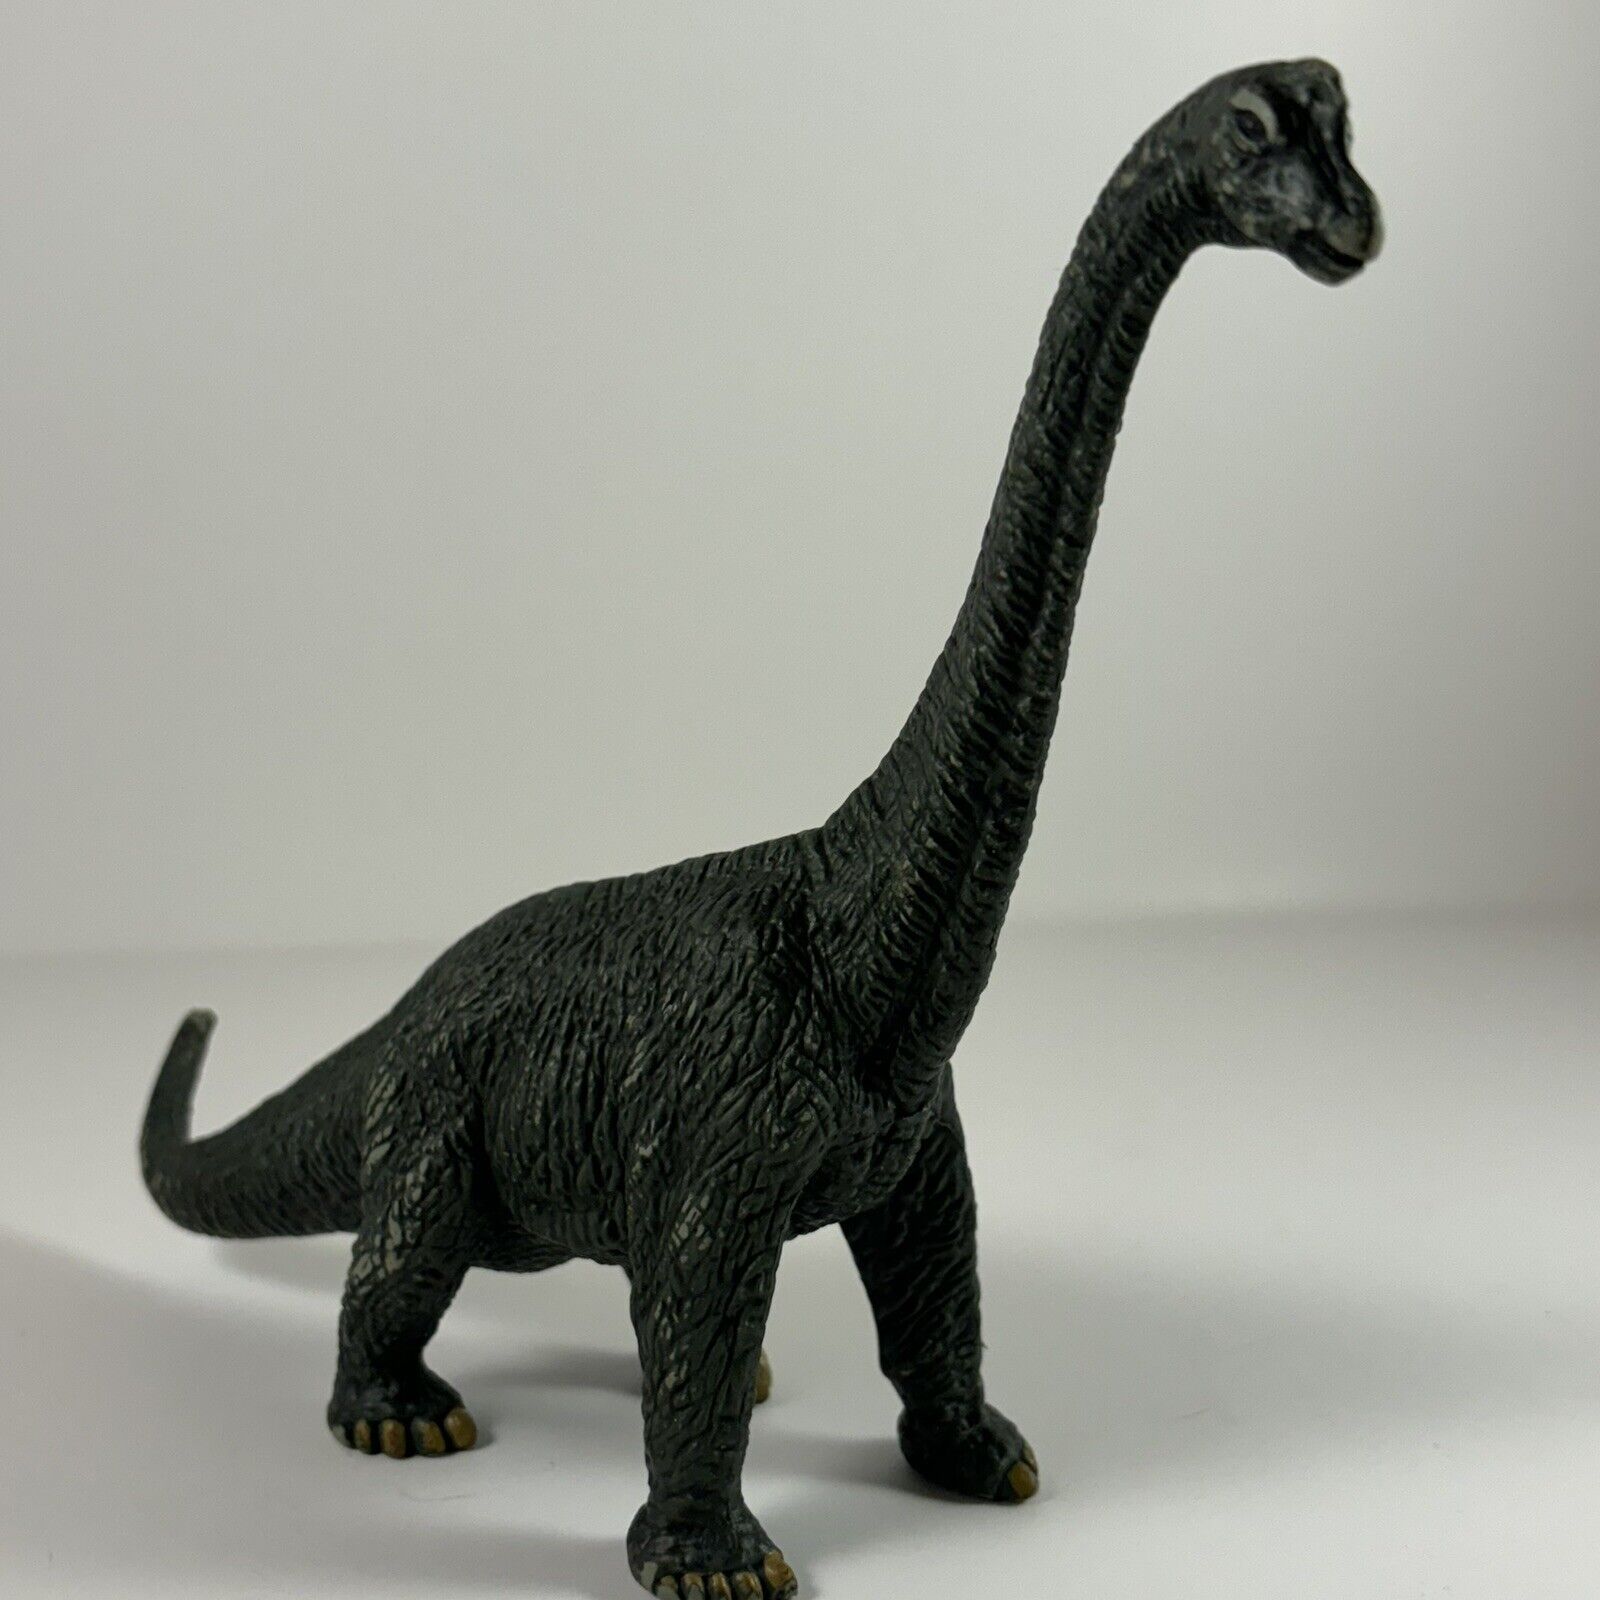 Papo Brachiosaurus 6” Prehistoric Dinosaur Figure Toy 2012